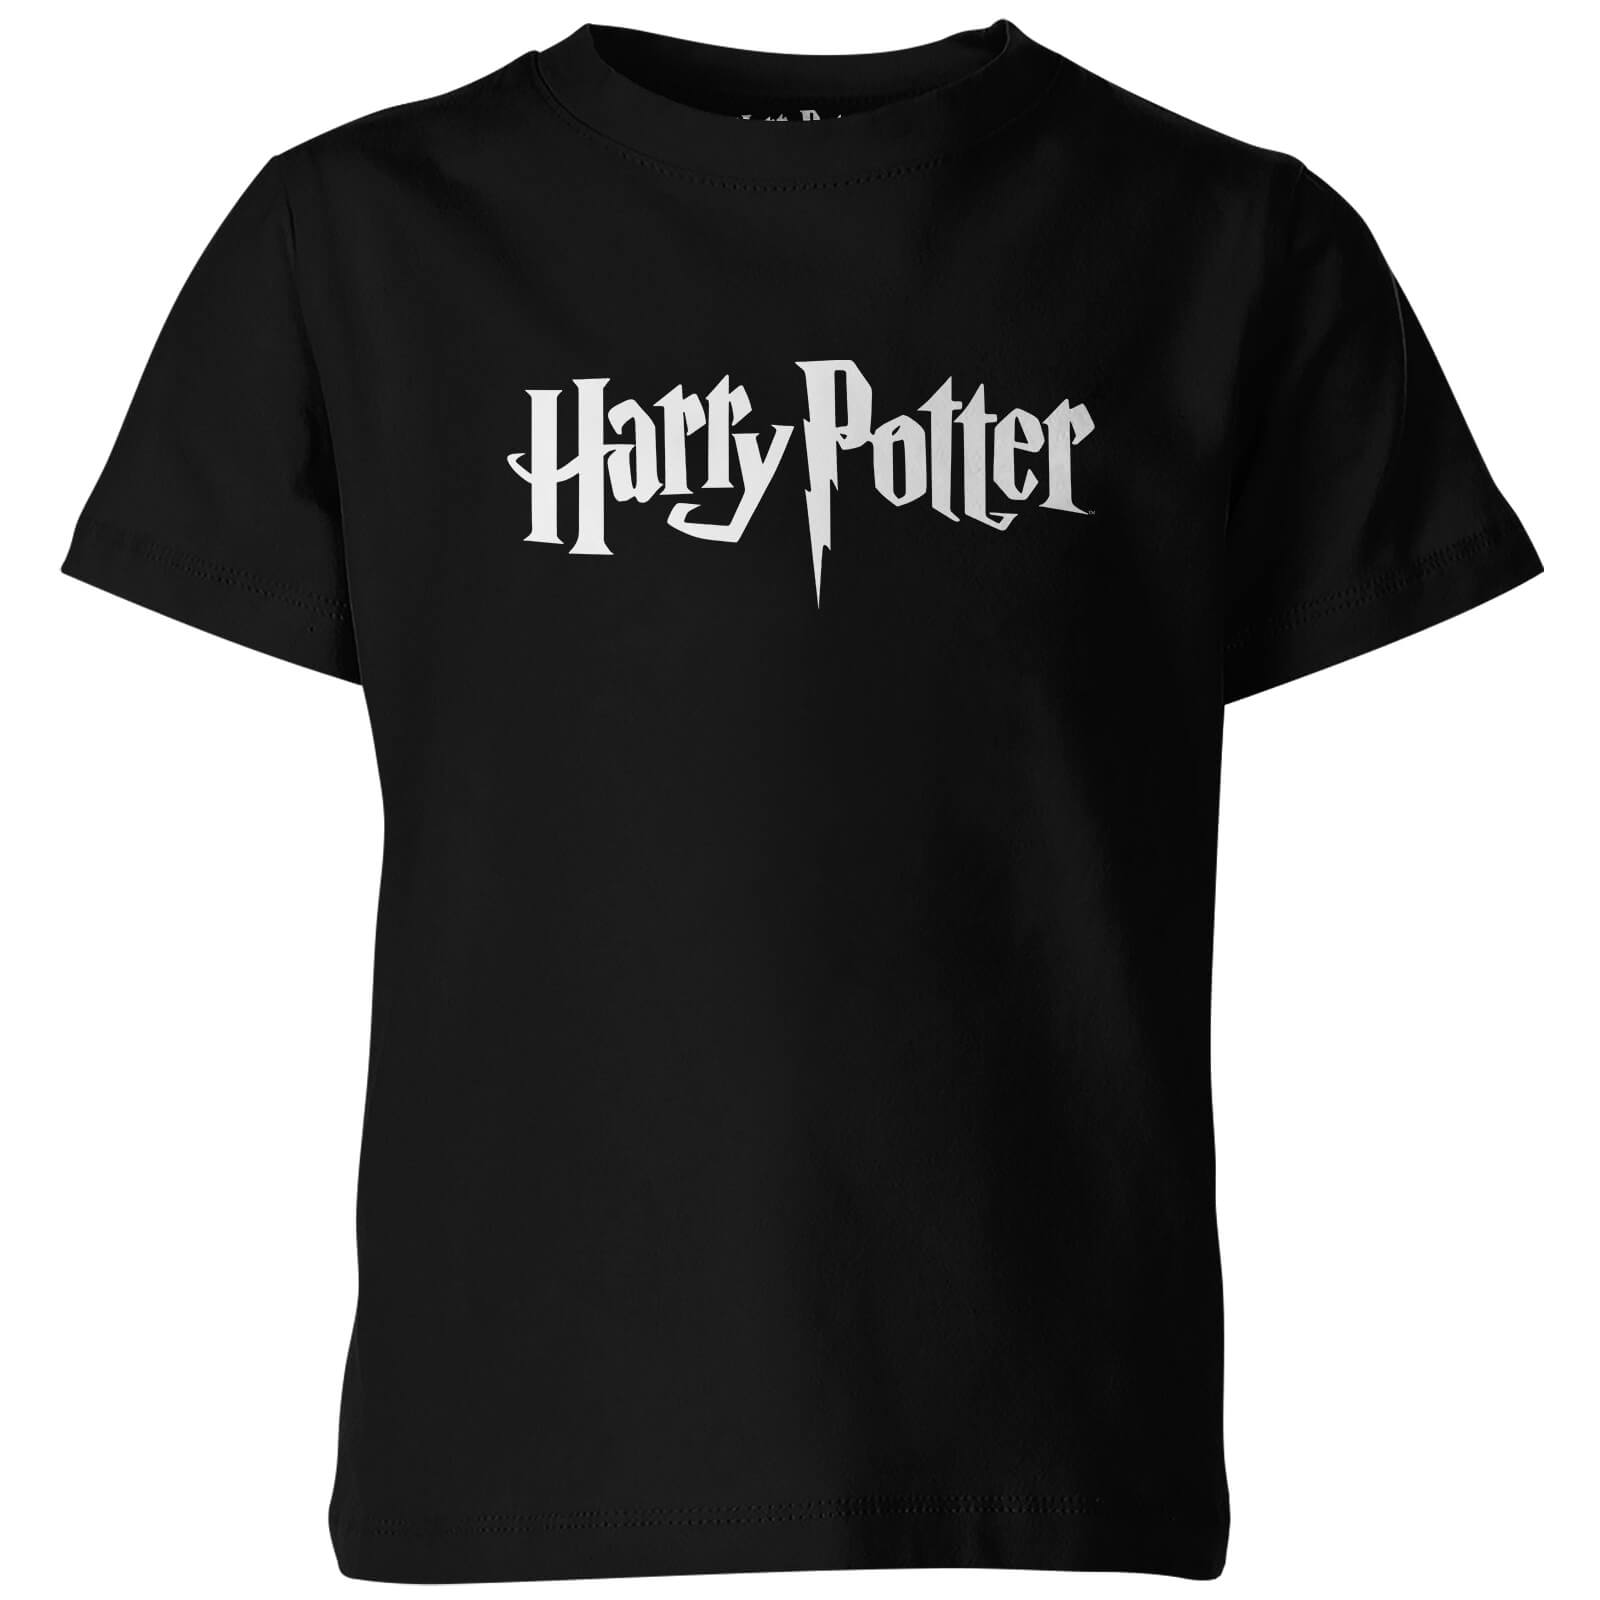 Harry Potter Logo Kid's Black T-Shirt - 9-10 Years - Black